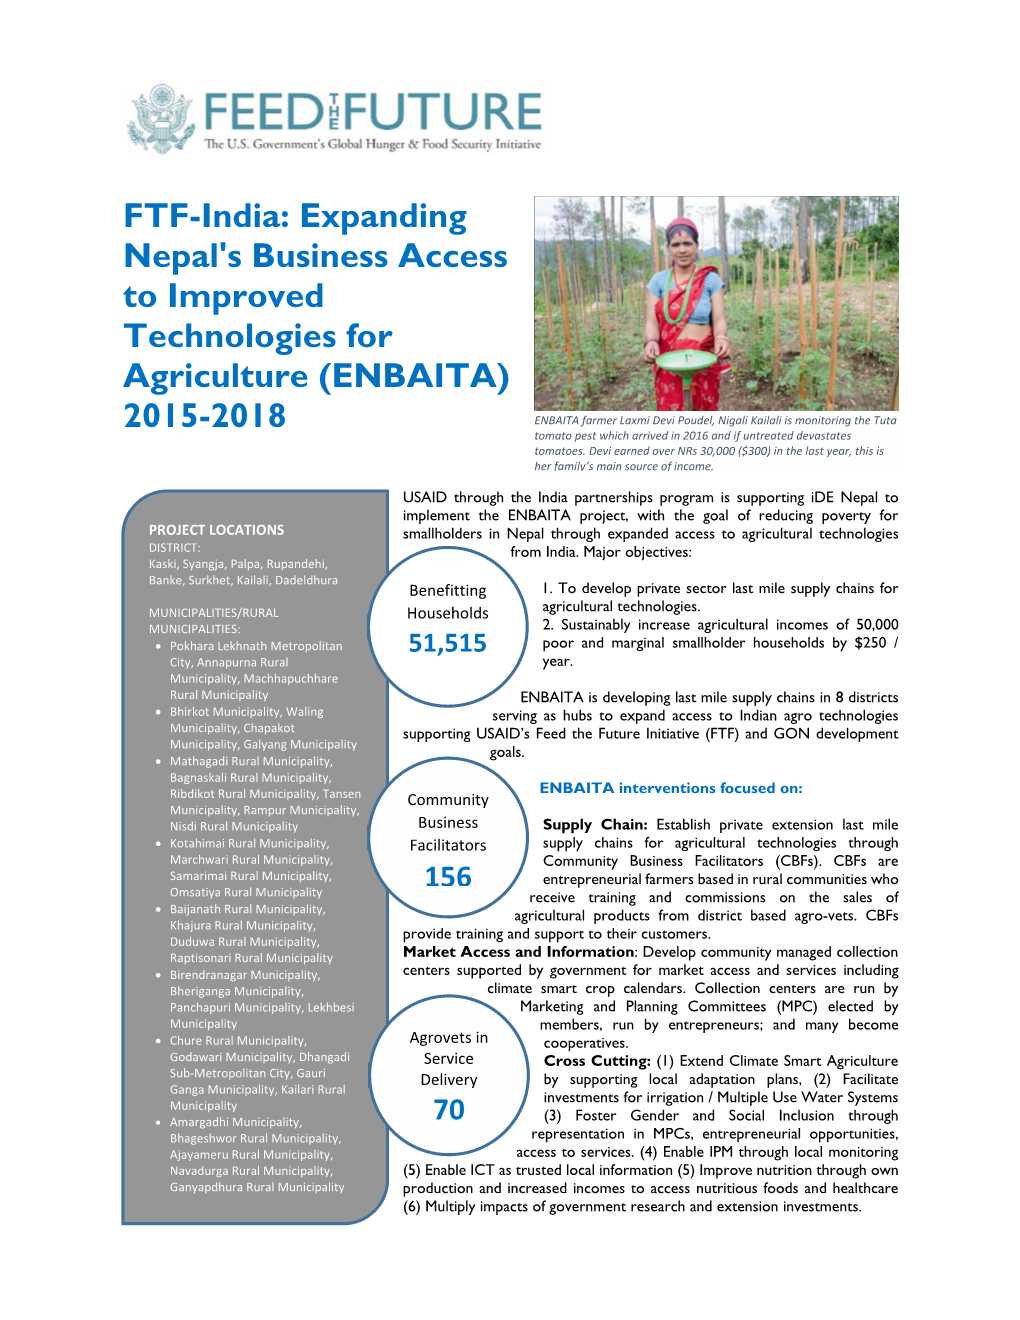 ENBAITA) 2015-2018 ENBAITA Farmer Laxmi Devi Poudel, Nigali Kailali Is Monitoring the Tuta Tomato Pest Which Arrived in 2016 and If Untreated Devastates